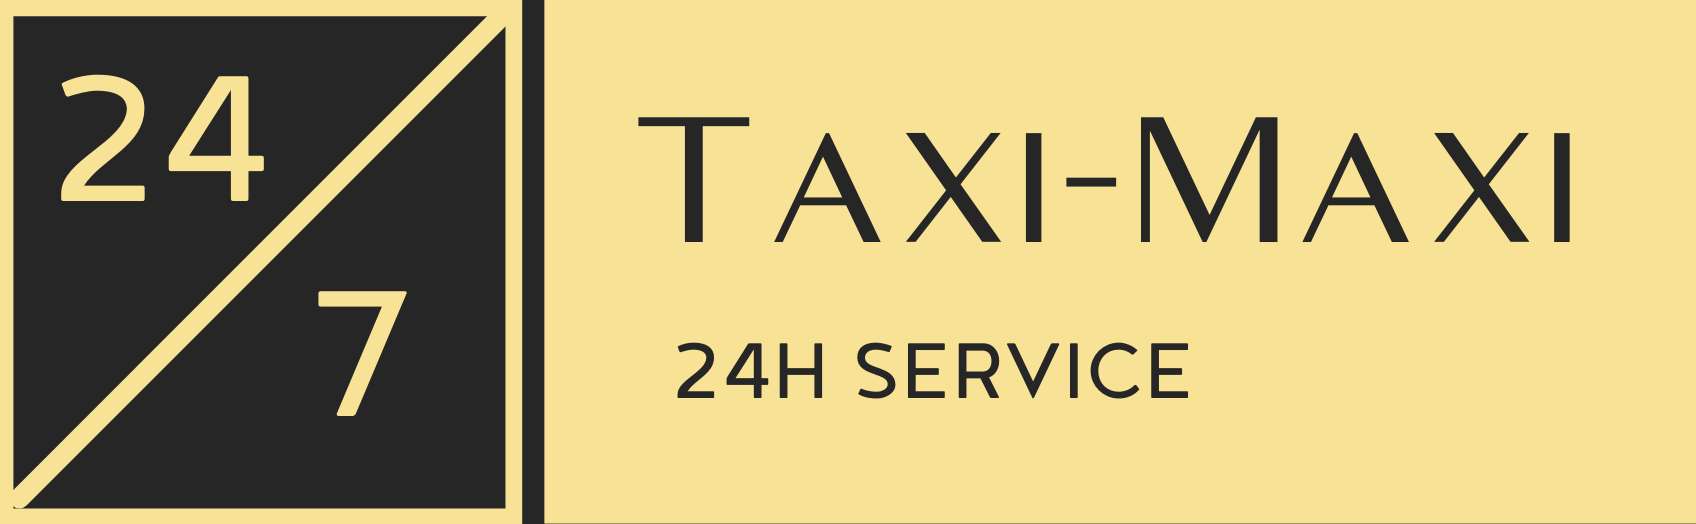 Taxi Maxi